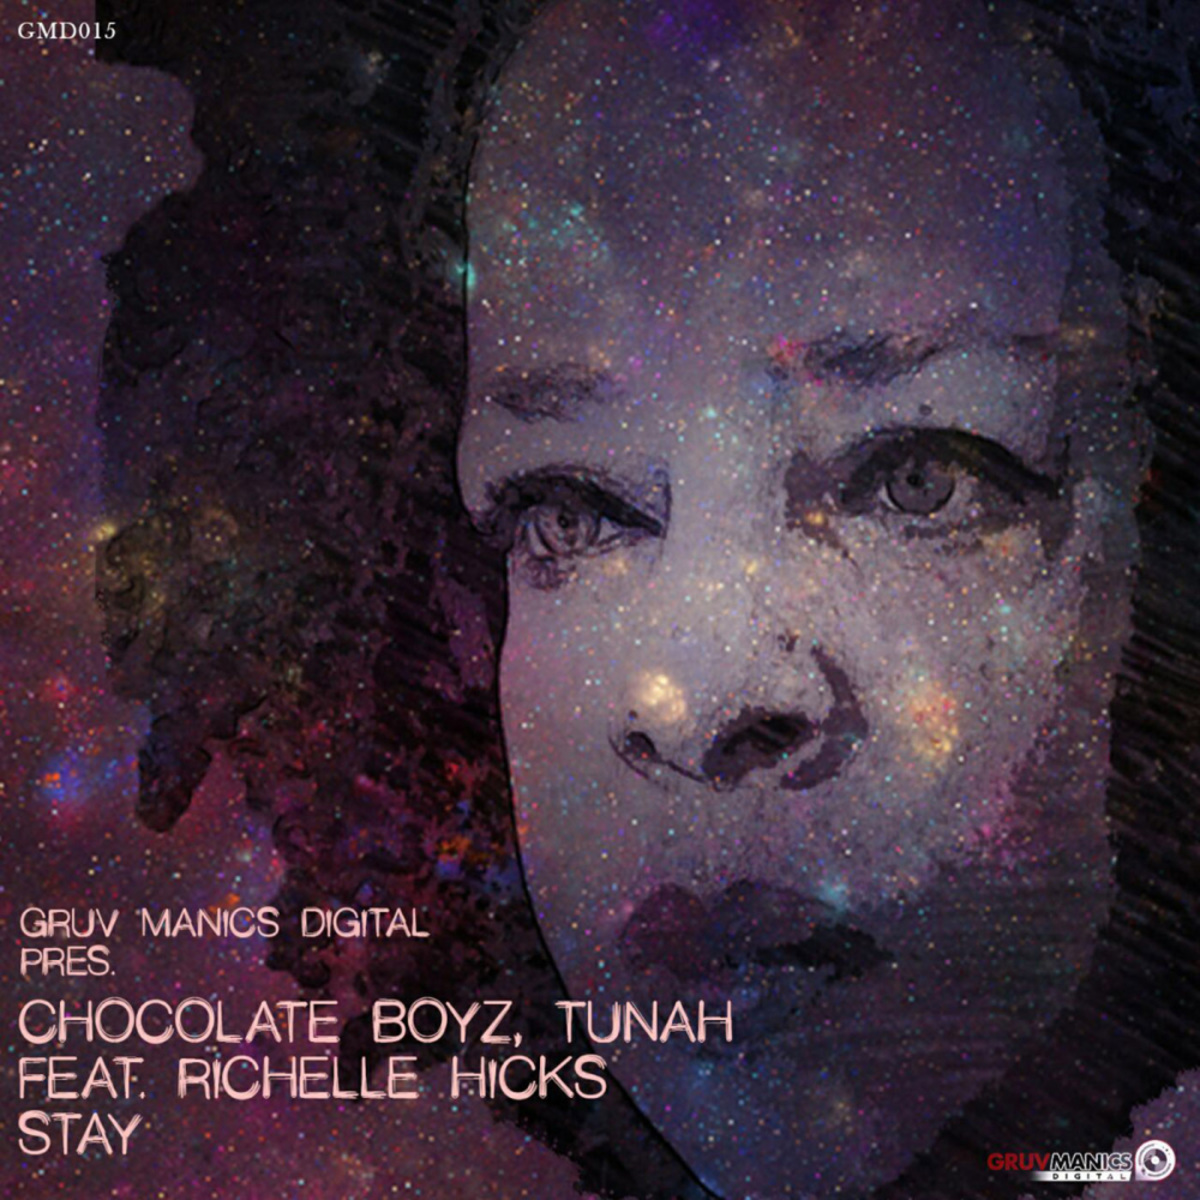 Chocolate Boyz & Tunah ft Richelle Hicks - Stay / Gruv Manics Digital SA